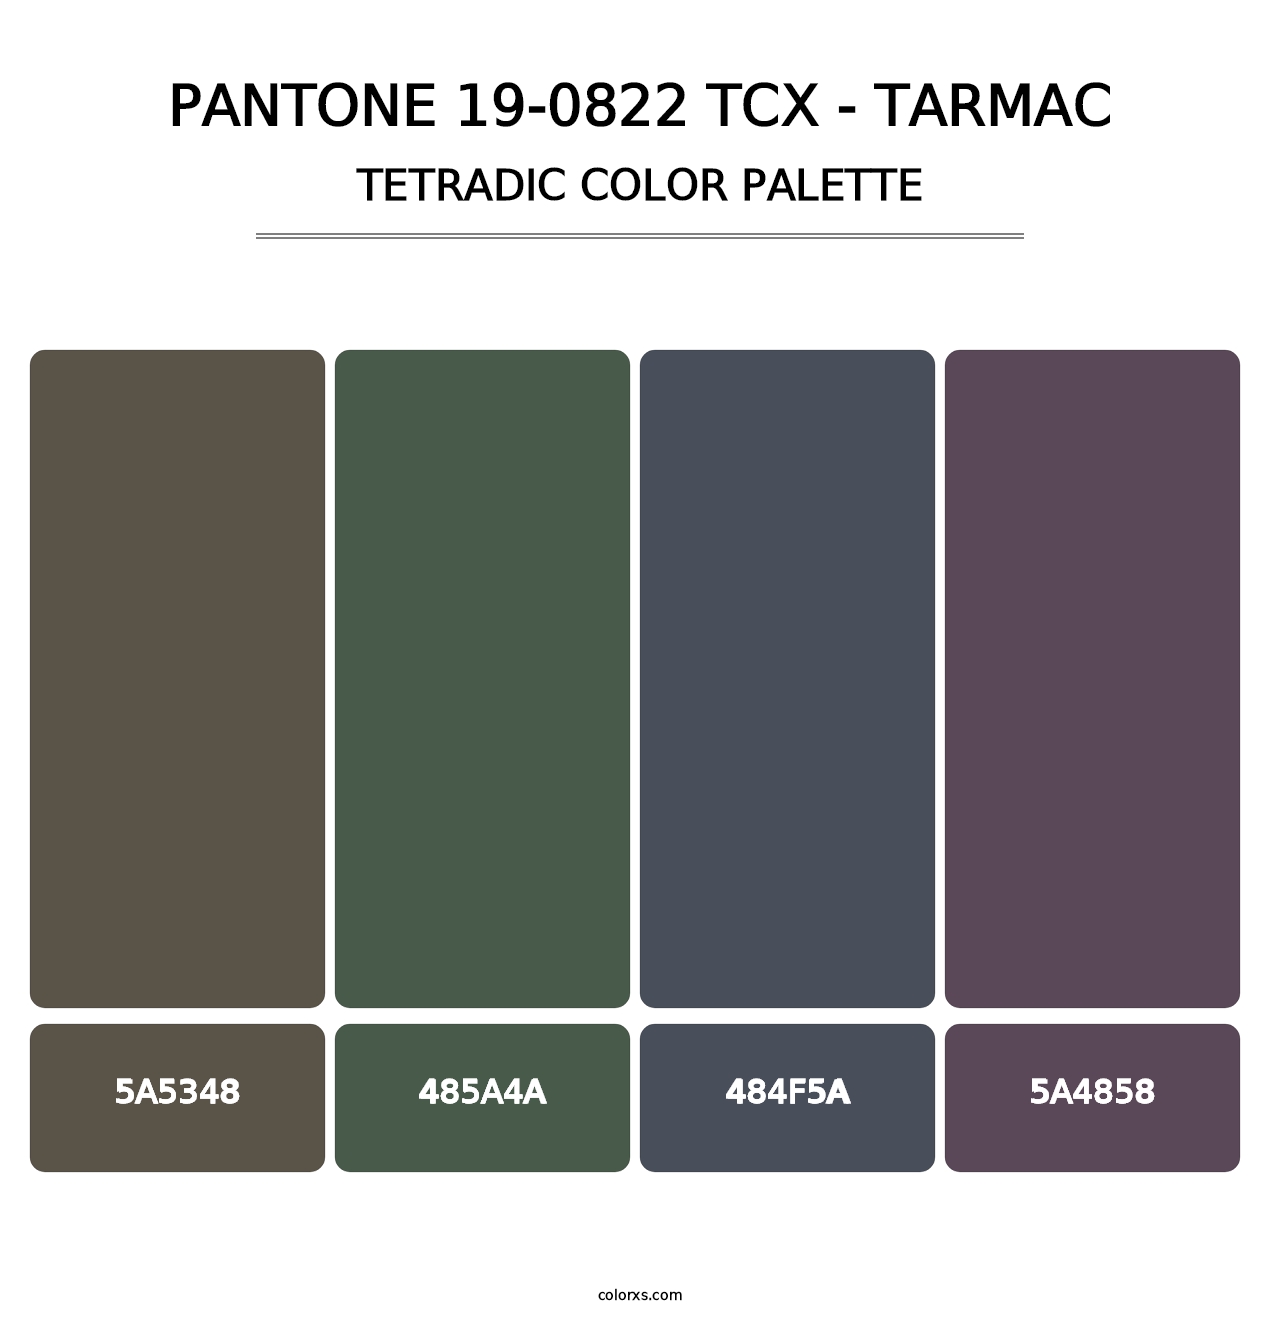 PANTONE 19-0822 TCX - Tarmac - Tetradic Color Palette